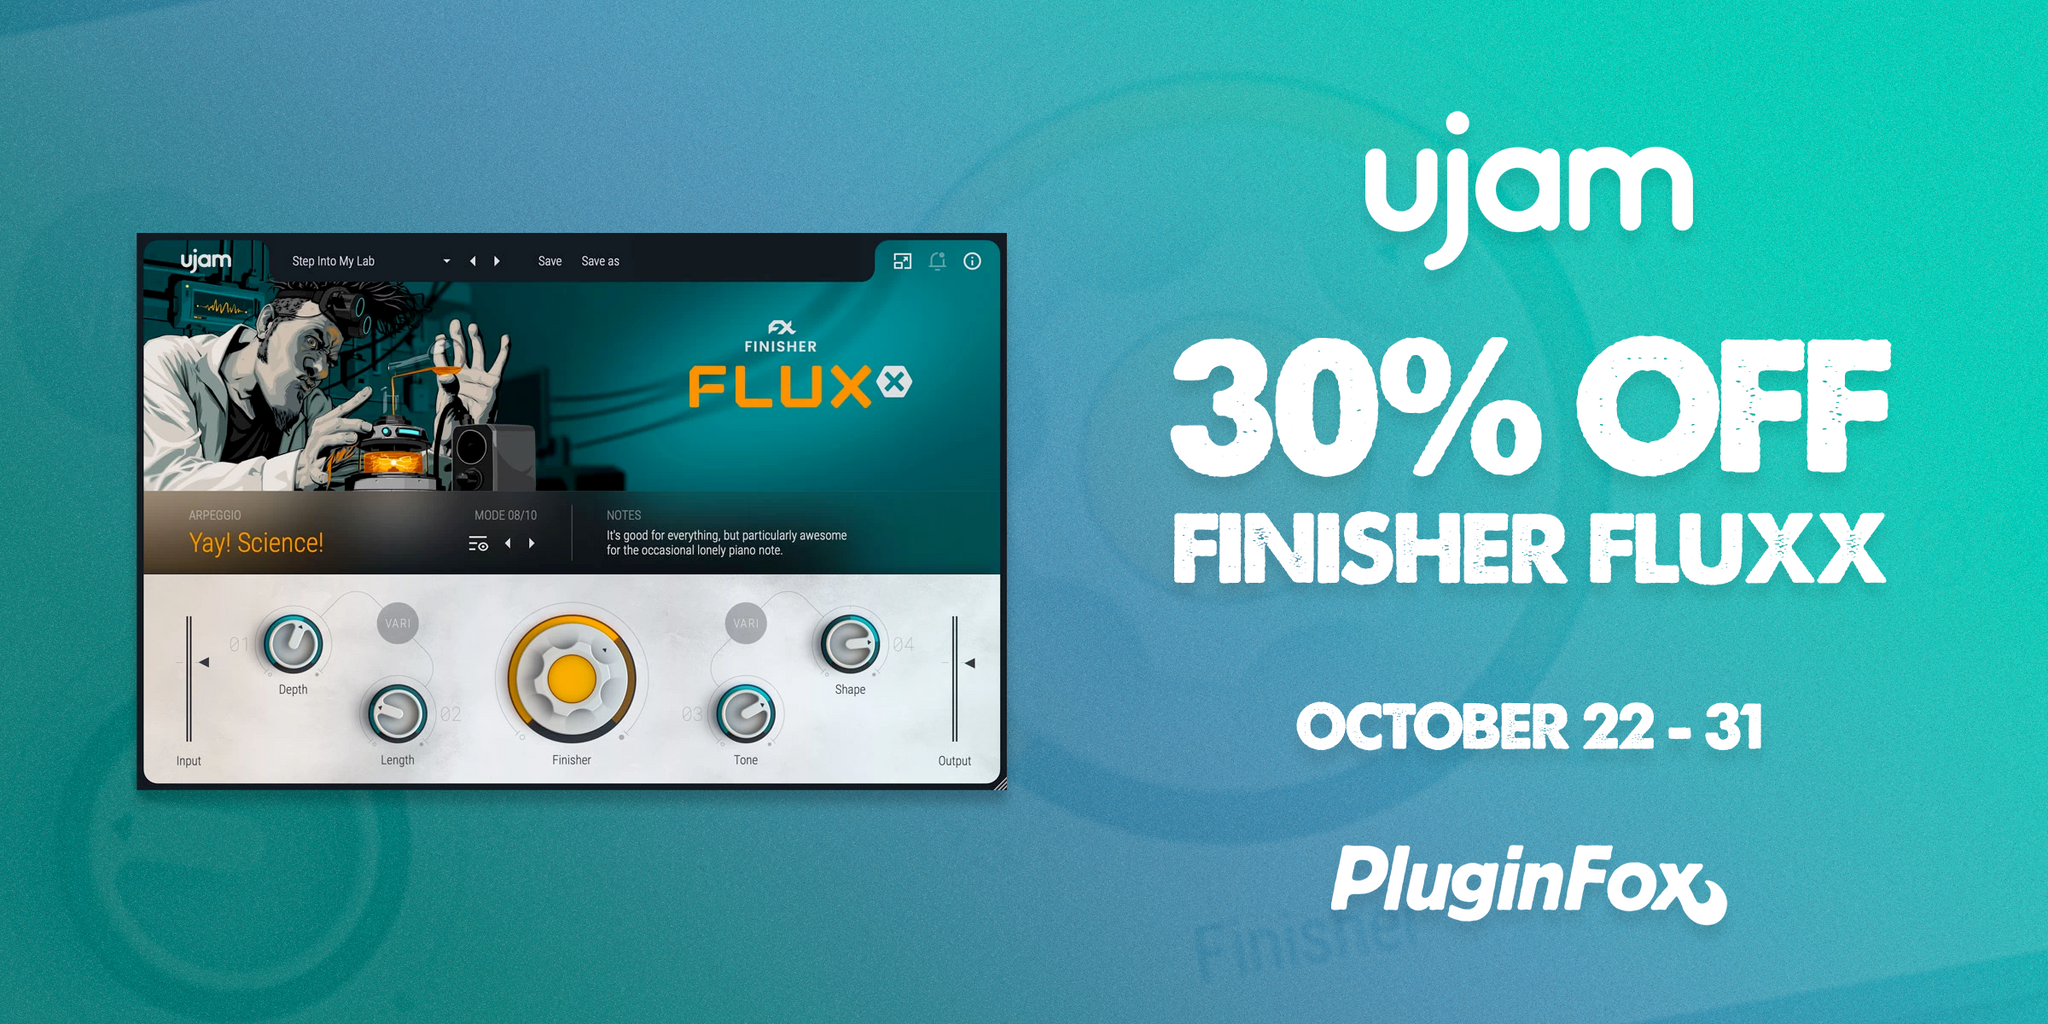 UJAM Finisher FLUXX Intro Sale - Oct 22-31